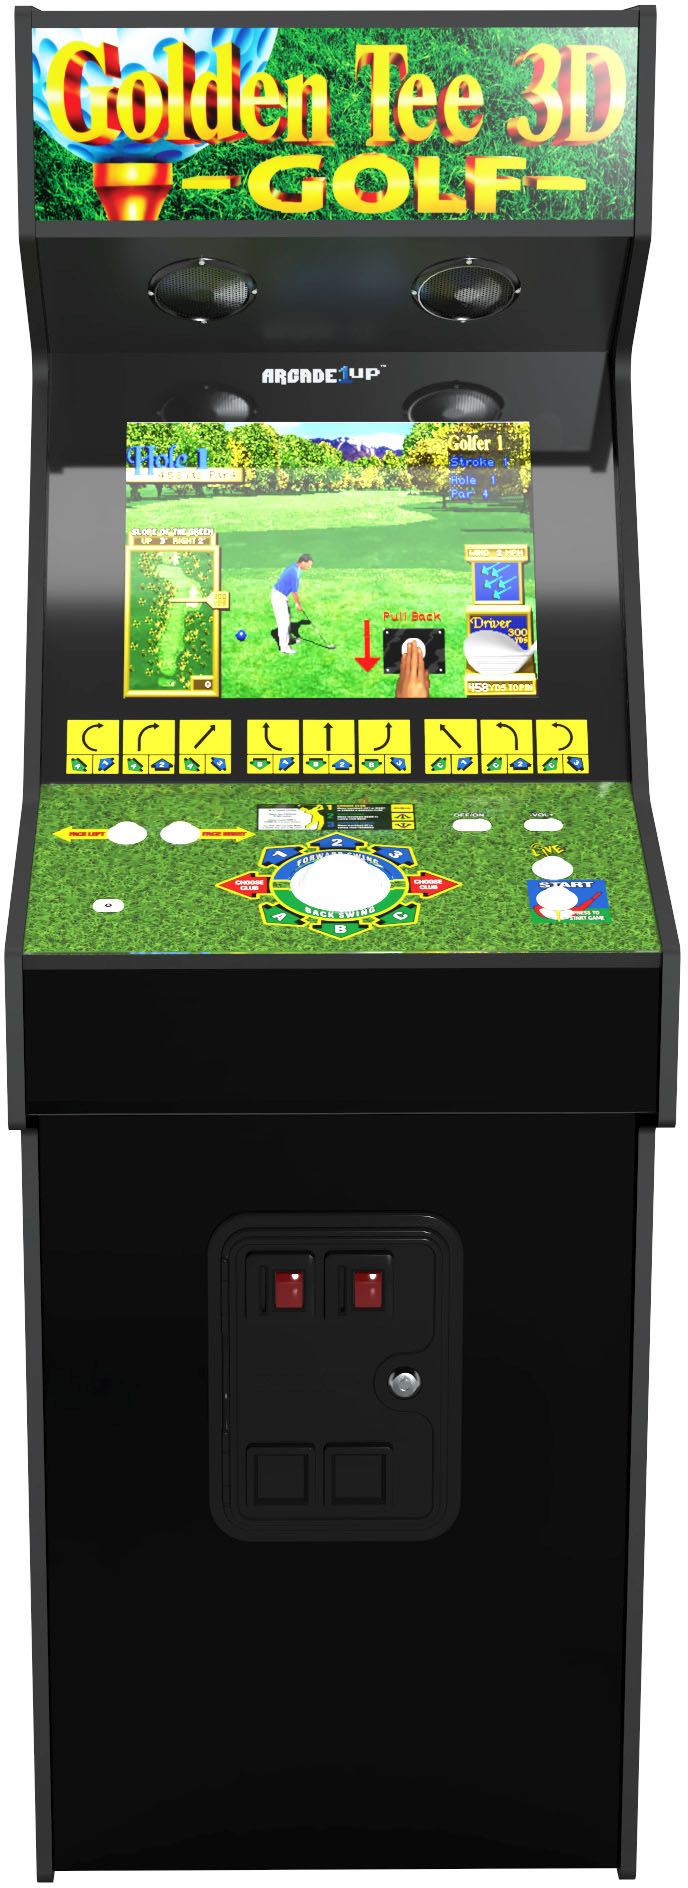 Arcade1Up Golden Tee 3D Golf 19" Arcade with Lit Marque GLD-A-200911 - Best Buy | Best Buy U.S.